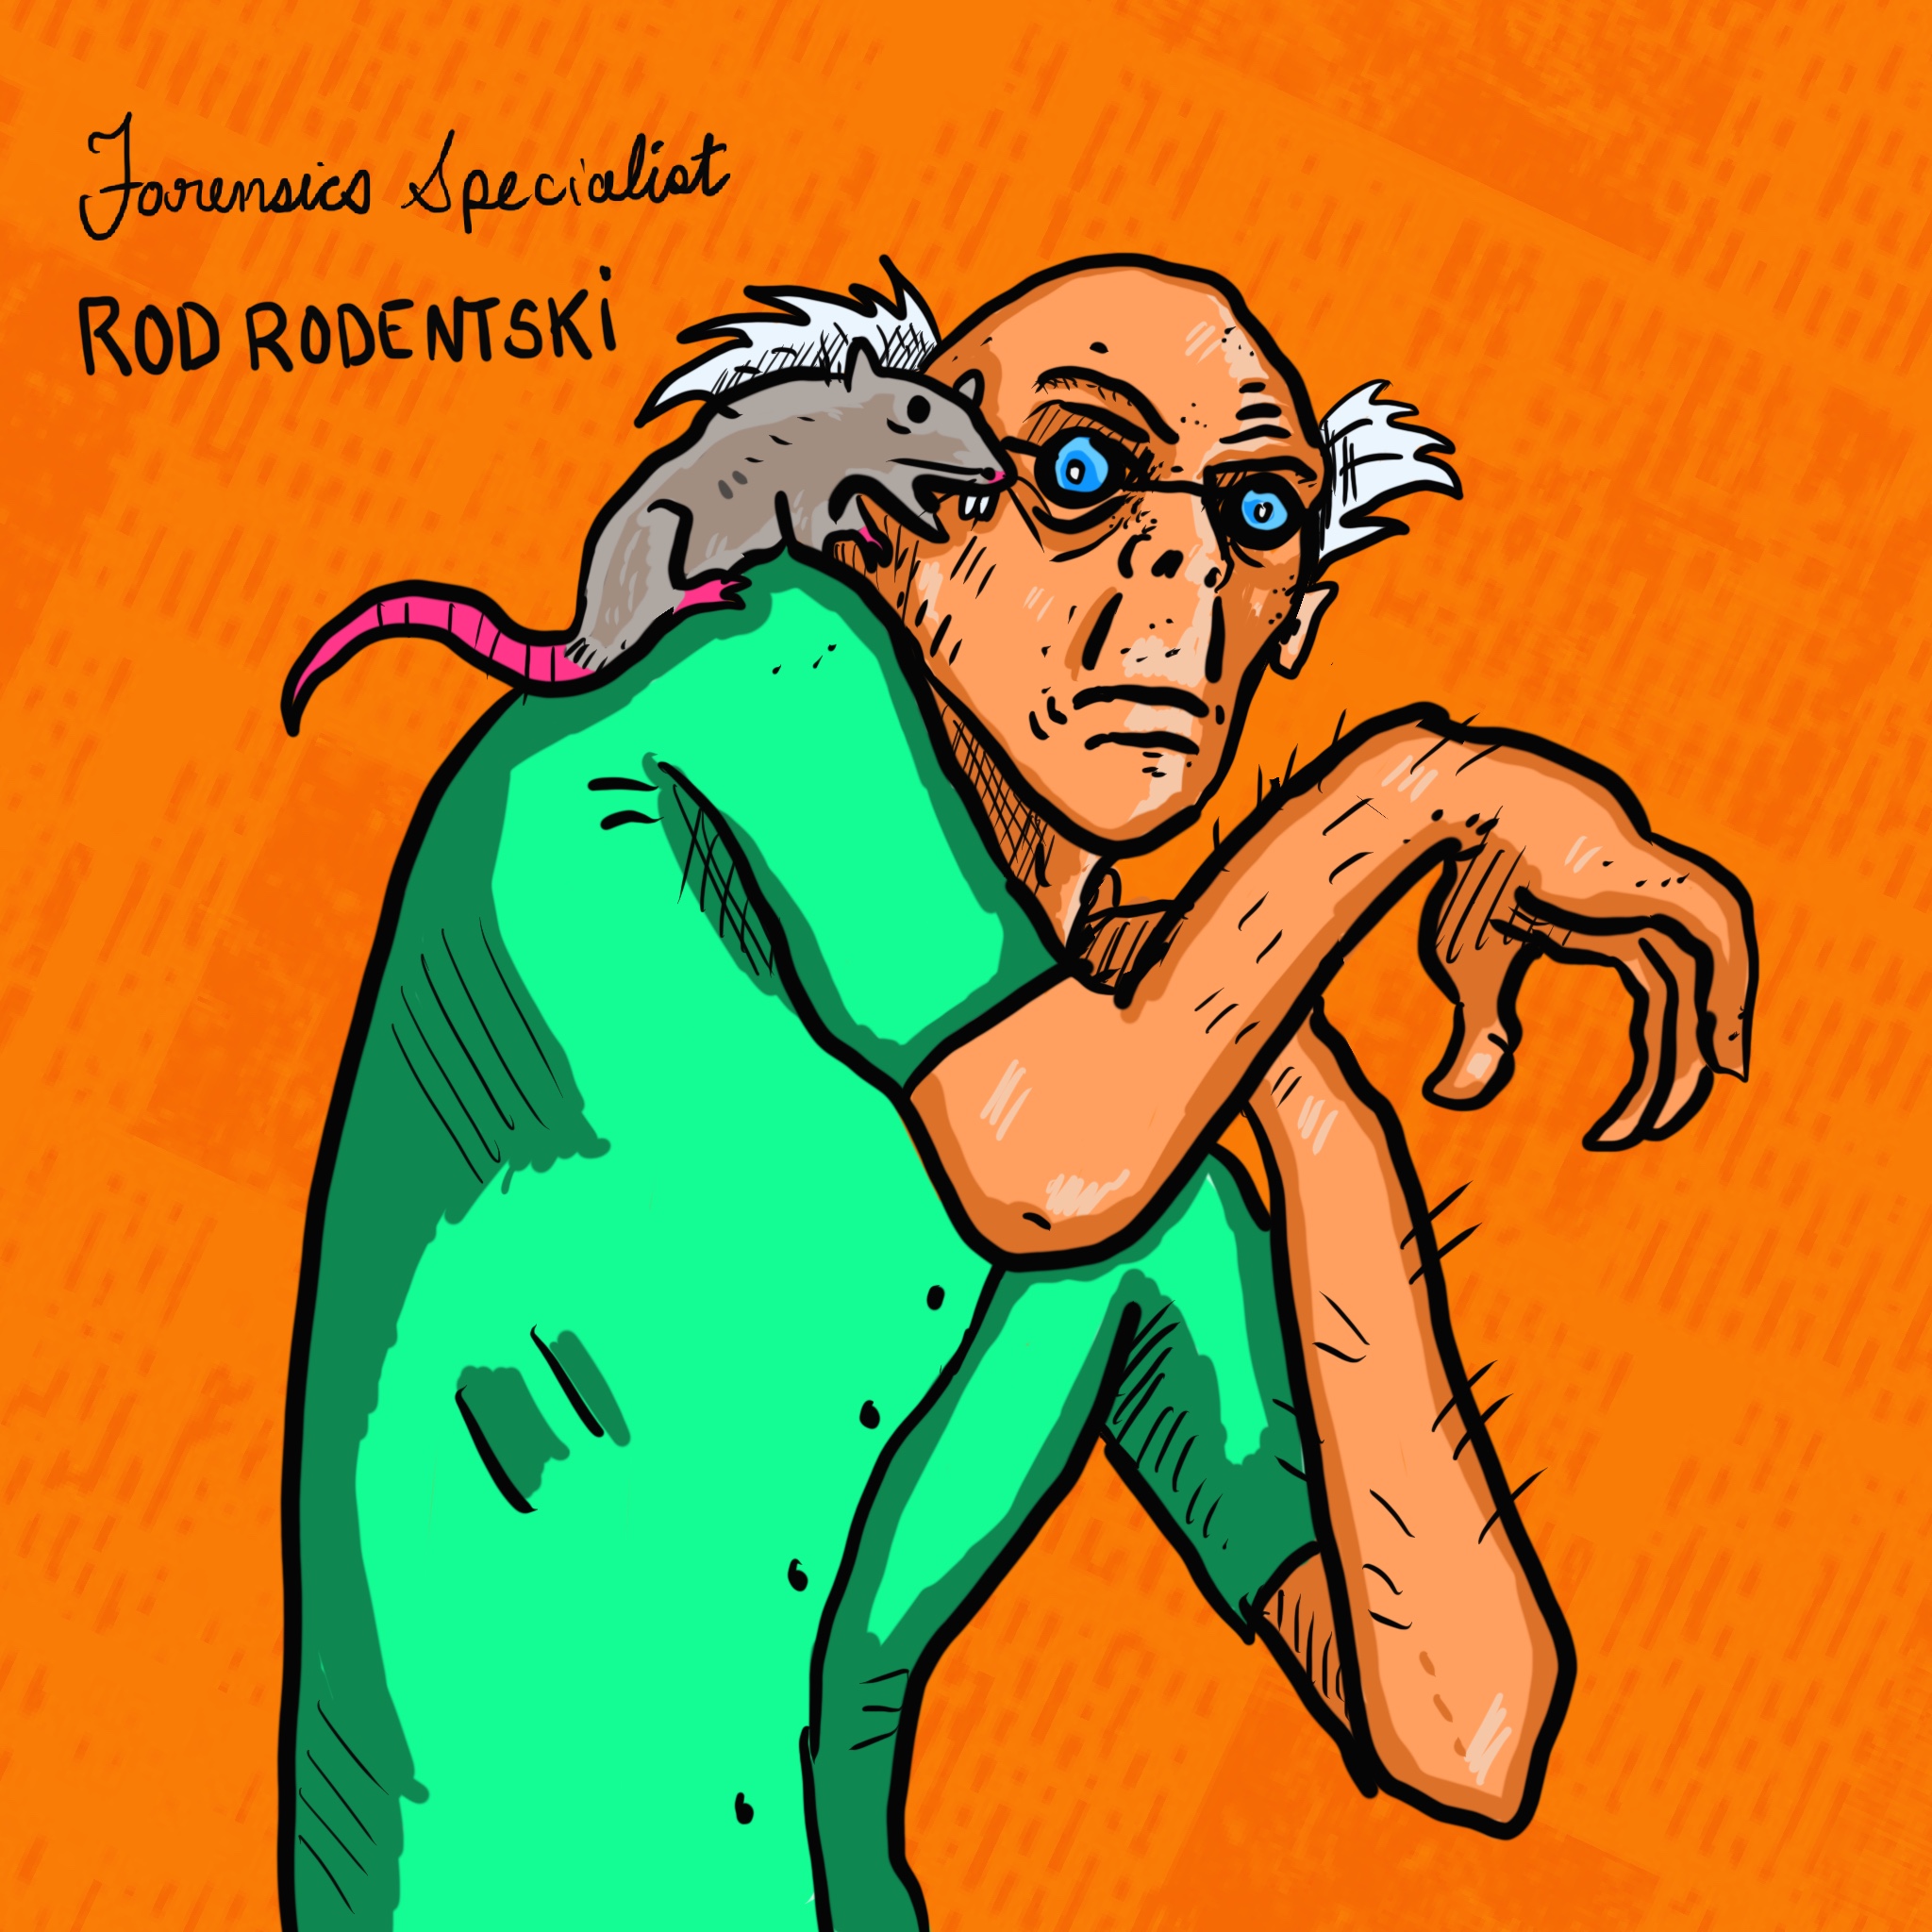 Rod Rodenski (Forensics Specialist)